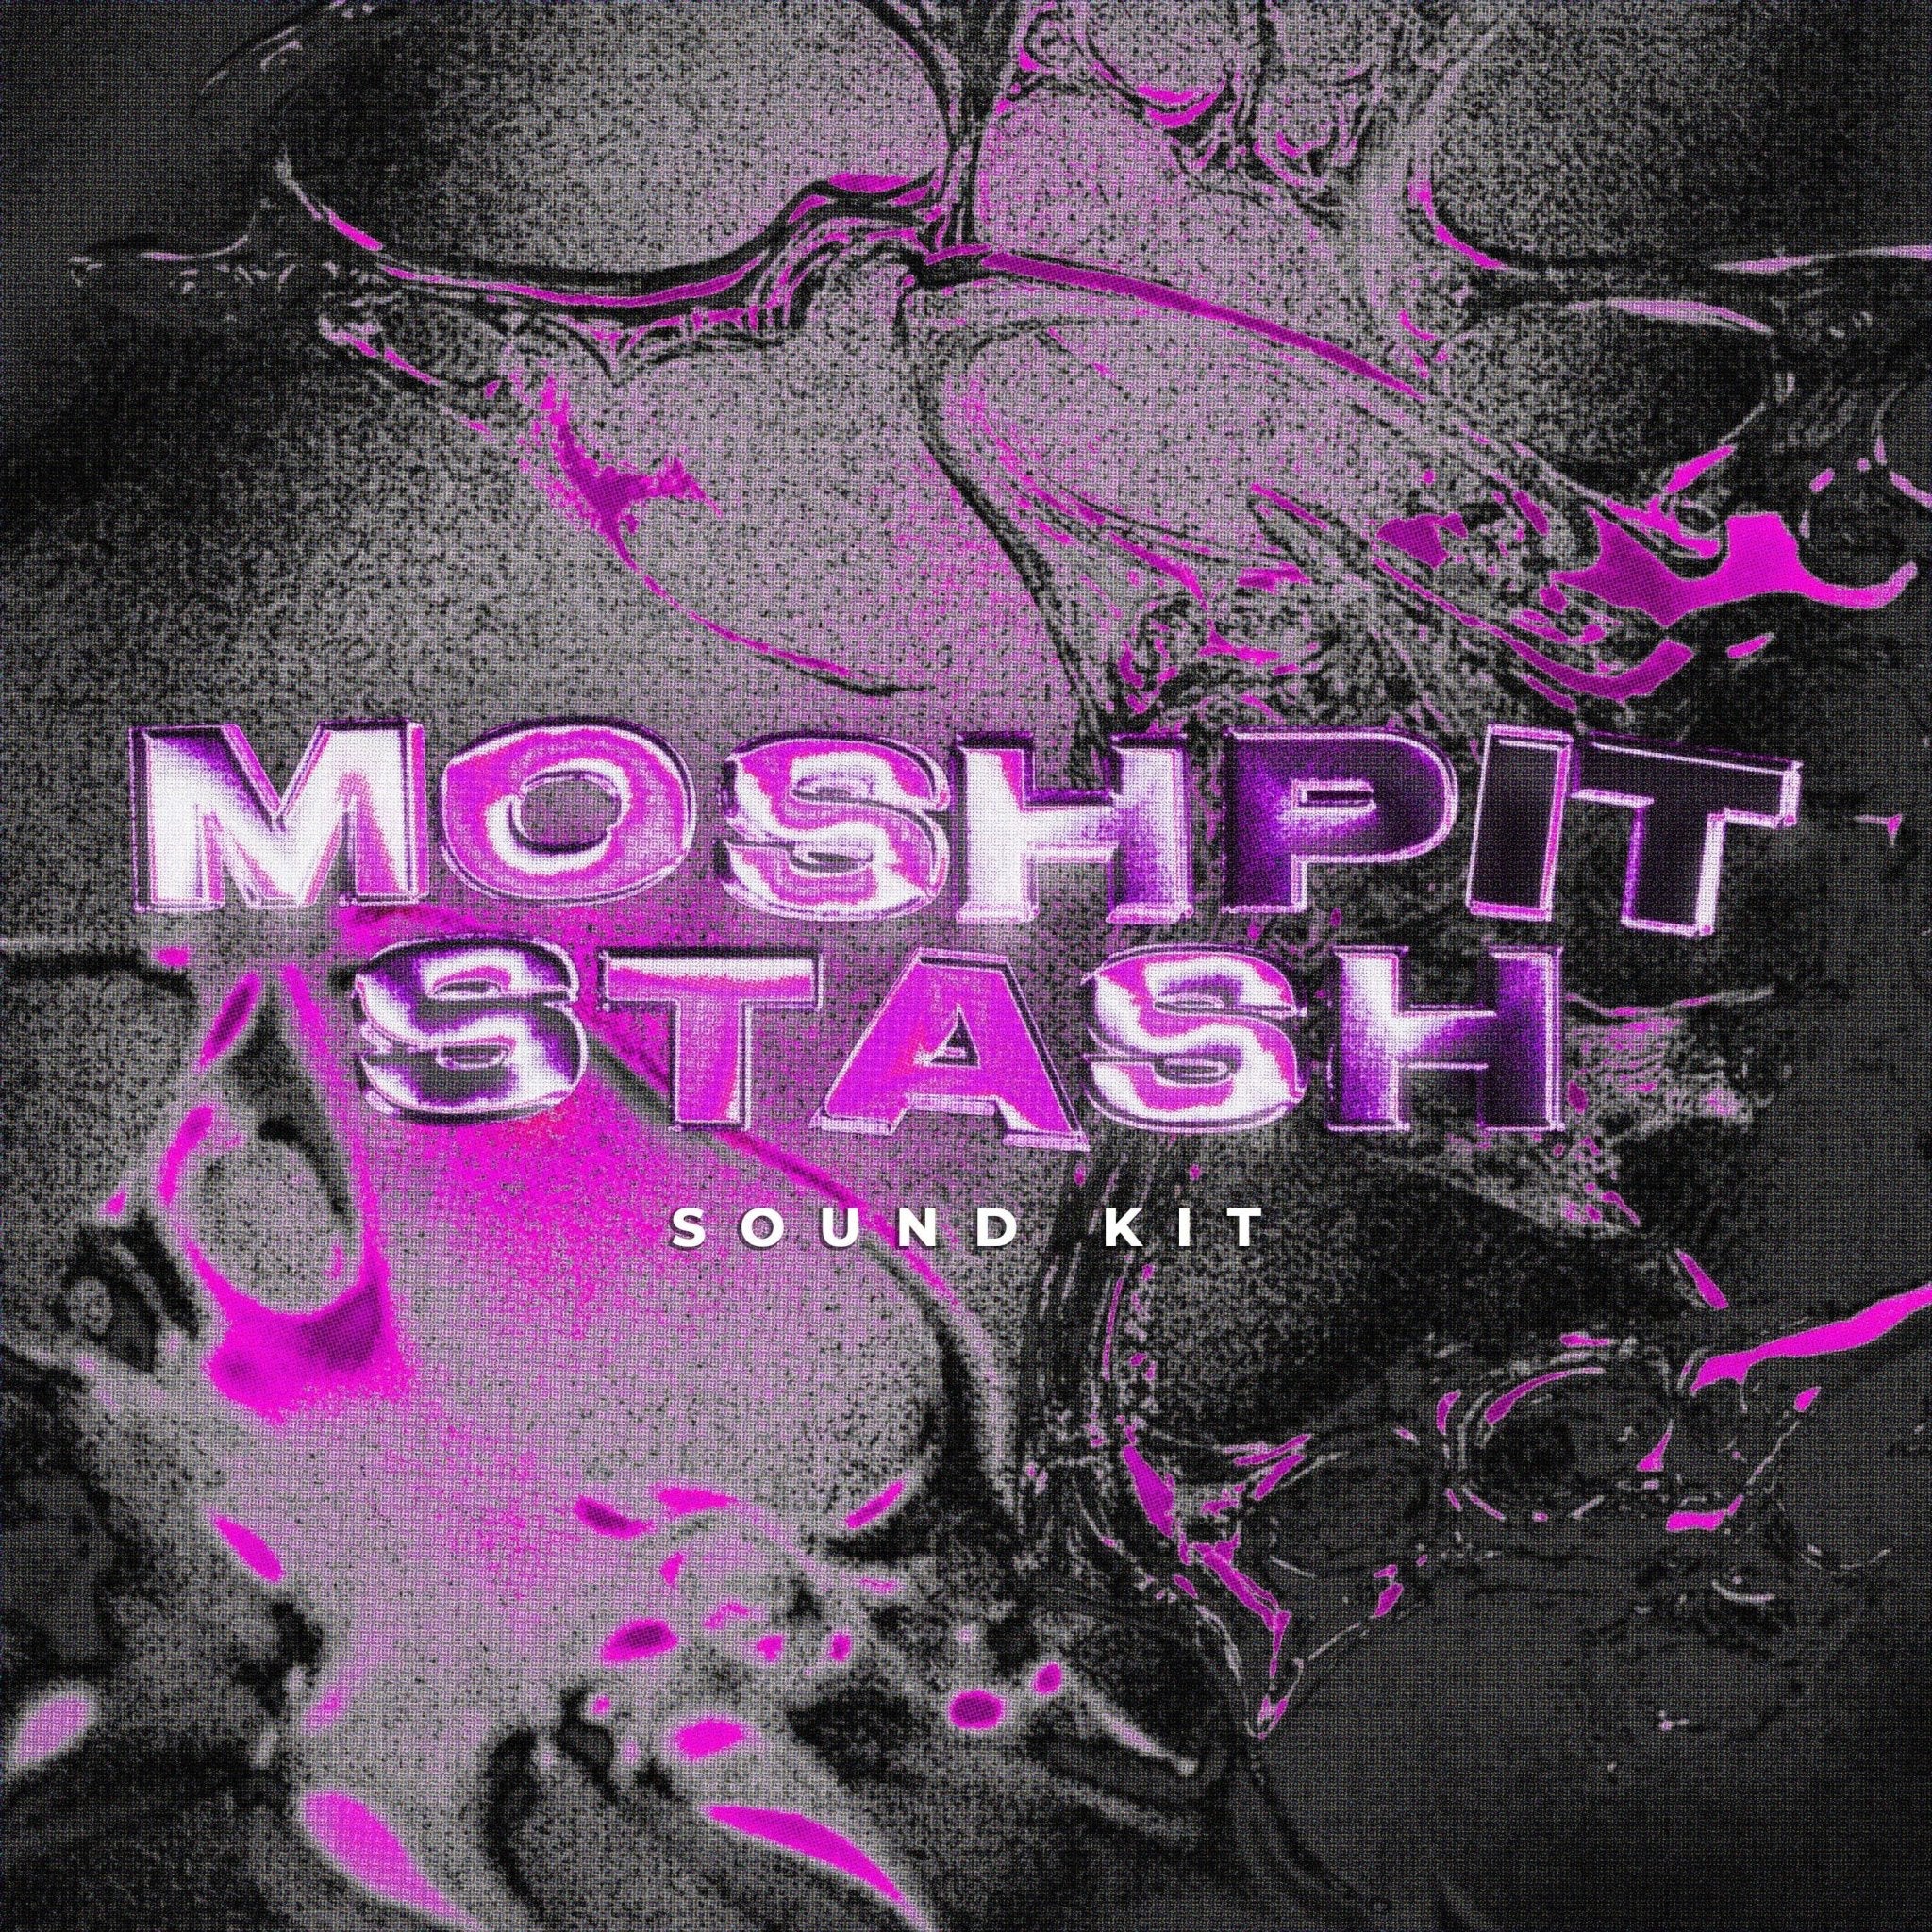 » Moshpit Stash (SoundKit) (100% off) - Thirteen Tecc Records